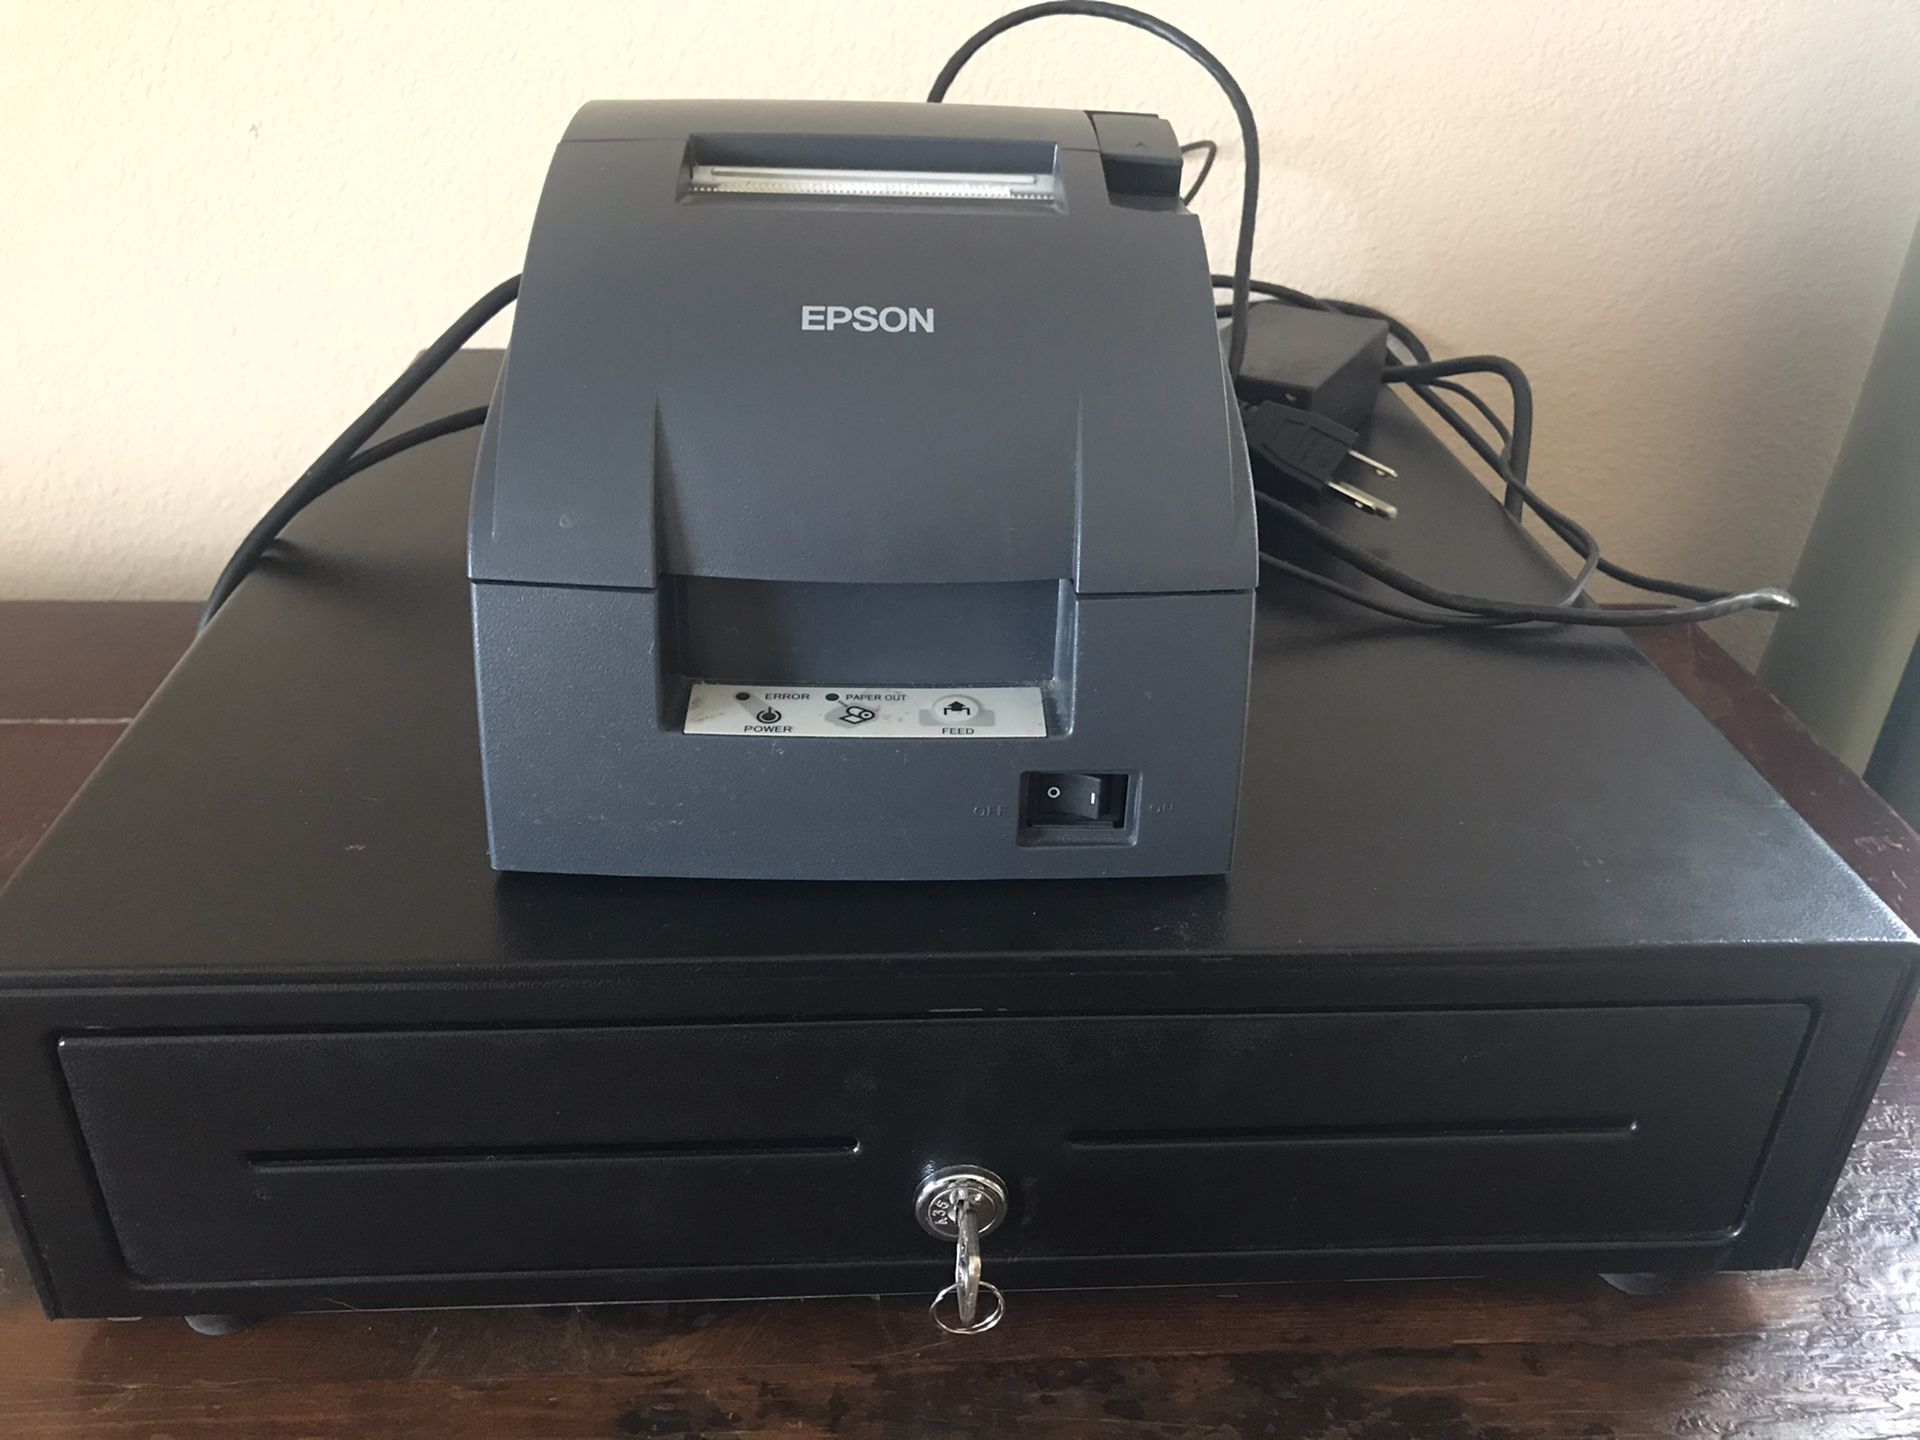 Epson thermal printer with APG cash drawer